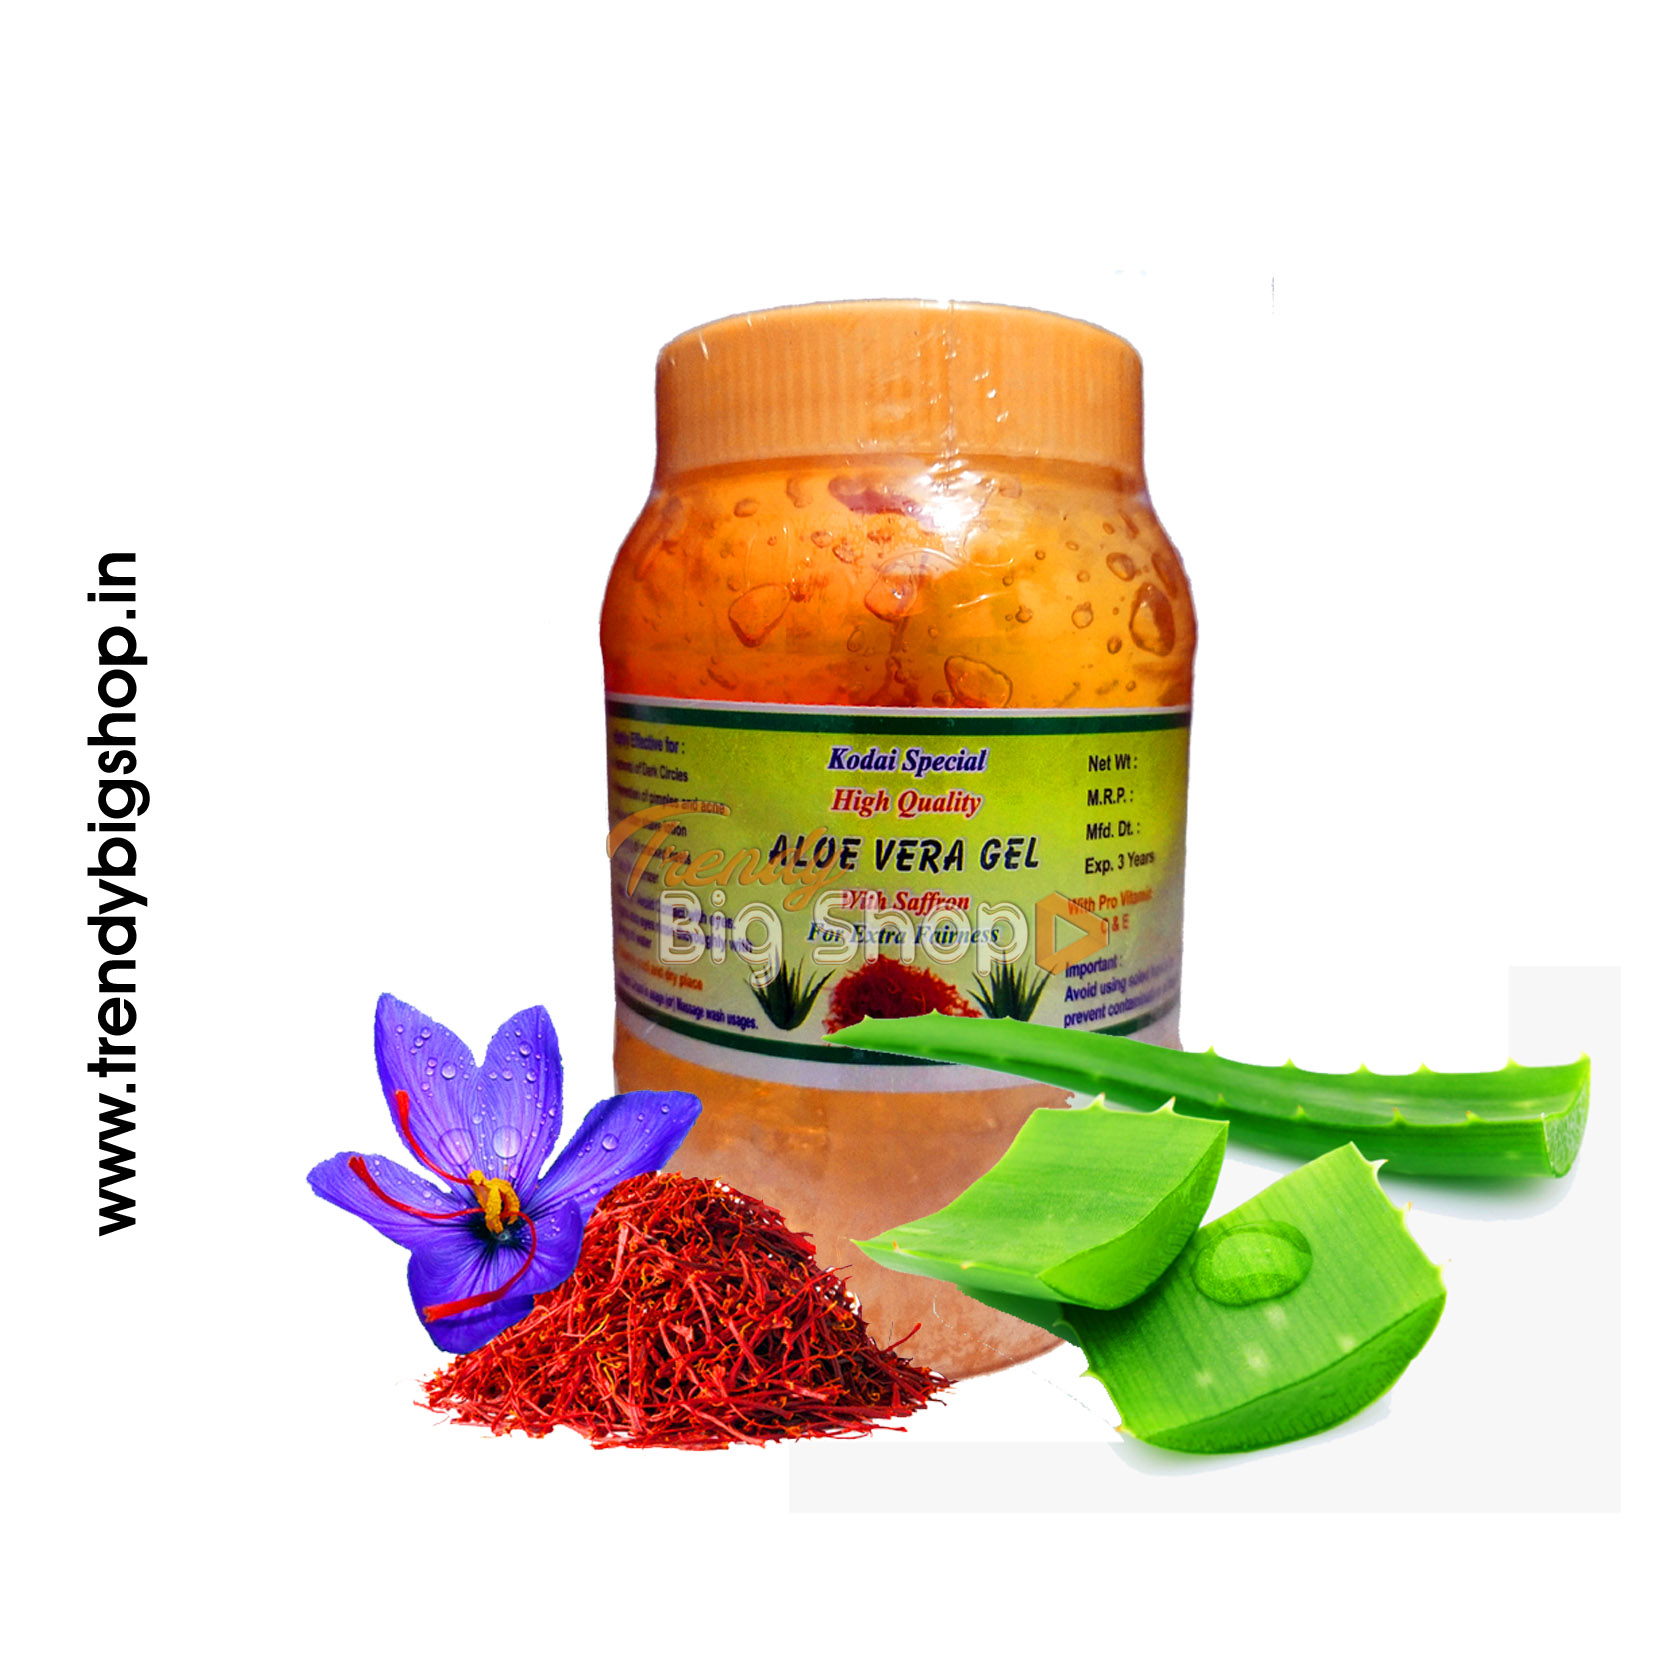 Aloevera Gel with saffron 250gm, Natural Aloevera product in Kodaikanal, India Herbal online store